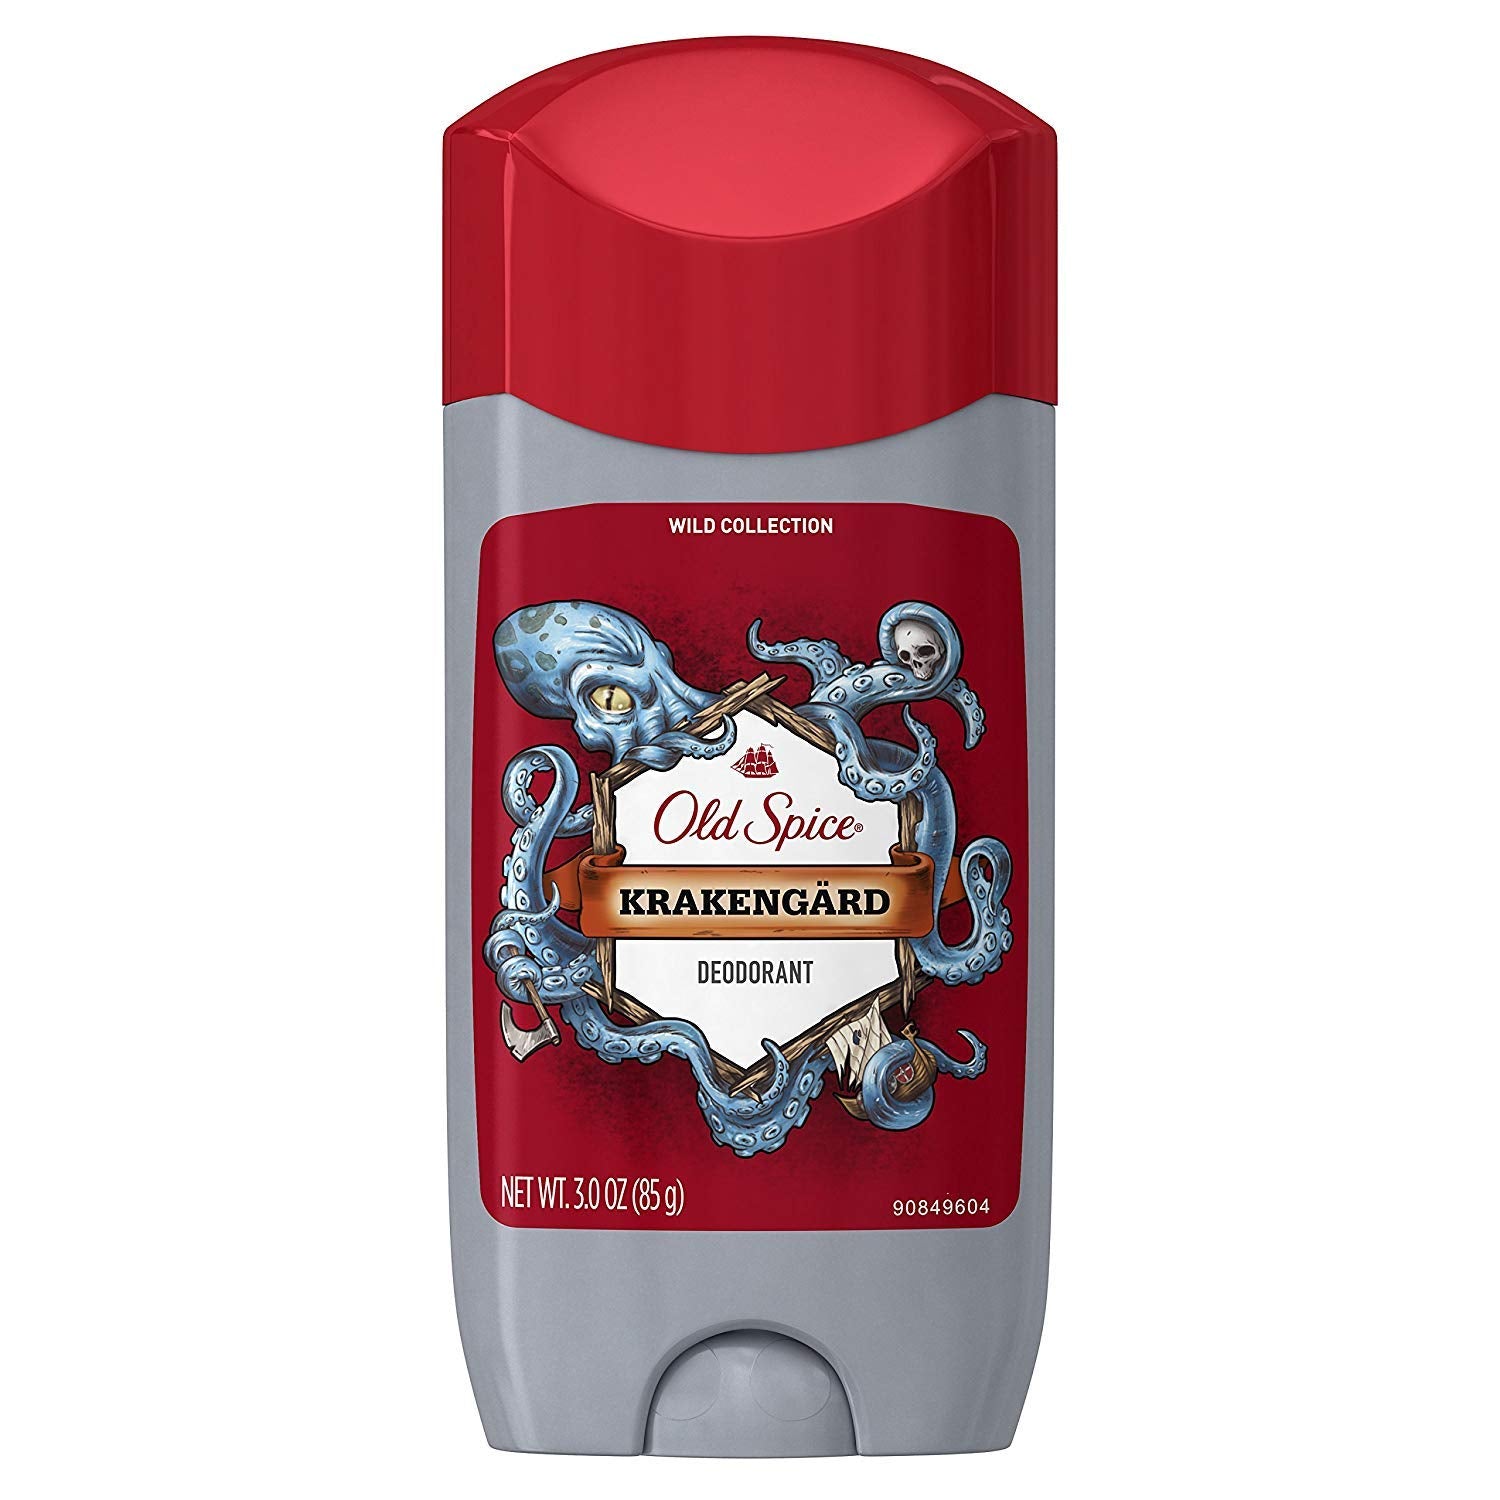 Buy Old Spice Wild Collection Krakengard Deodorant